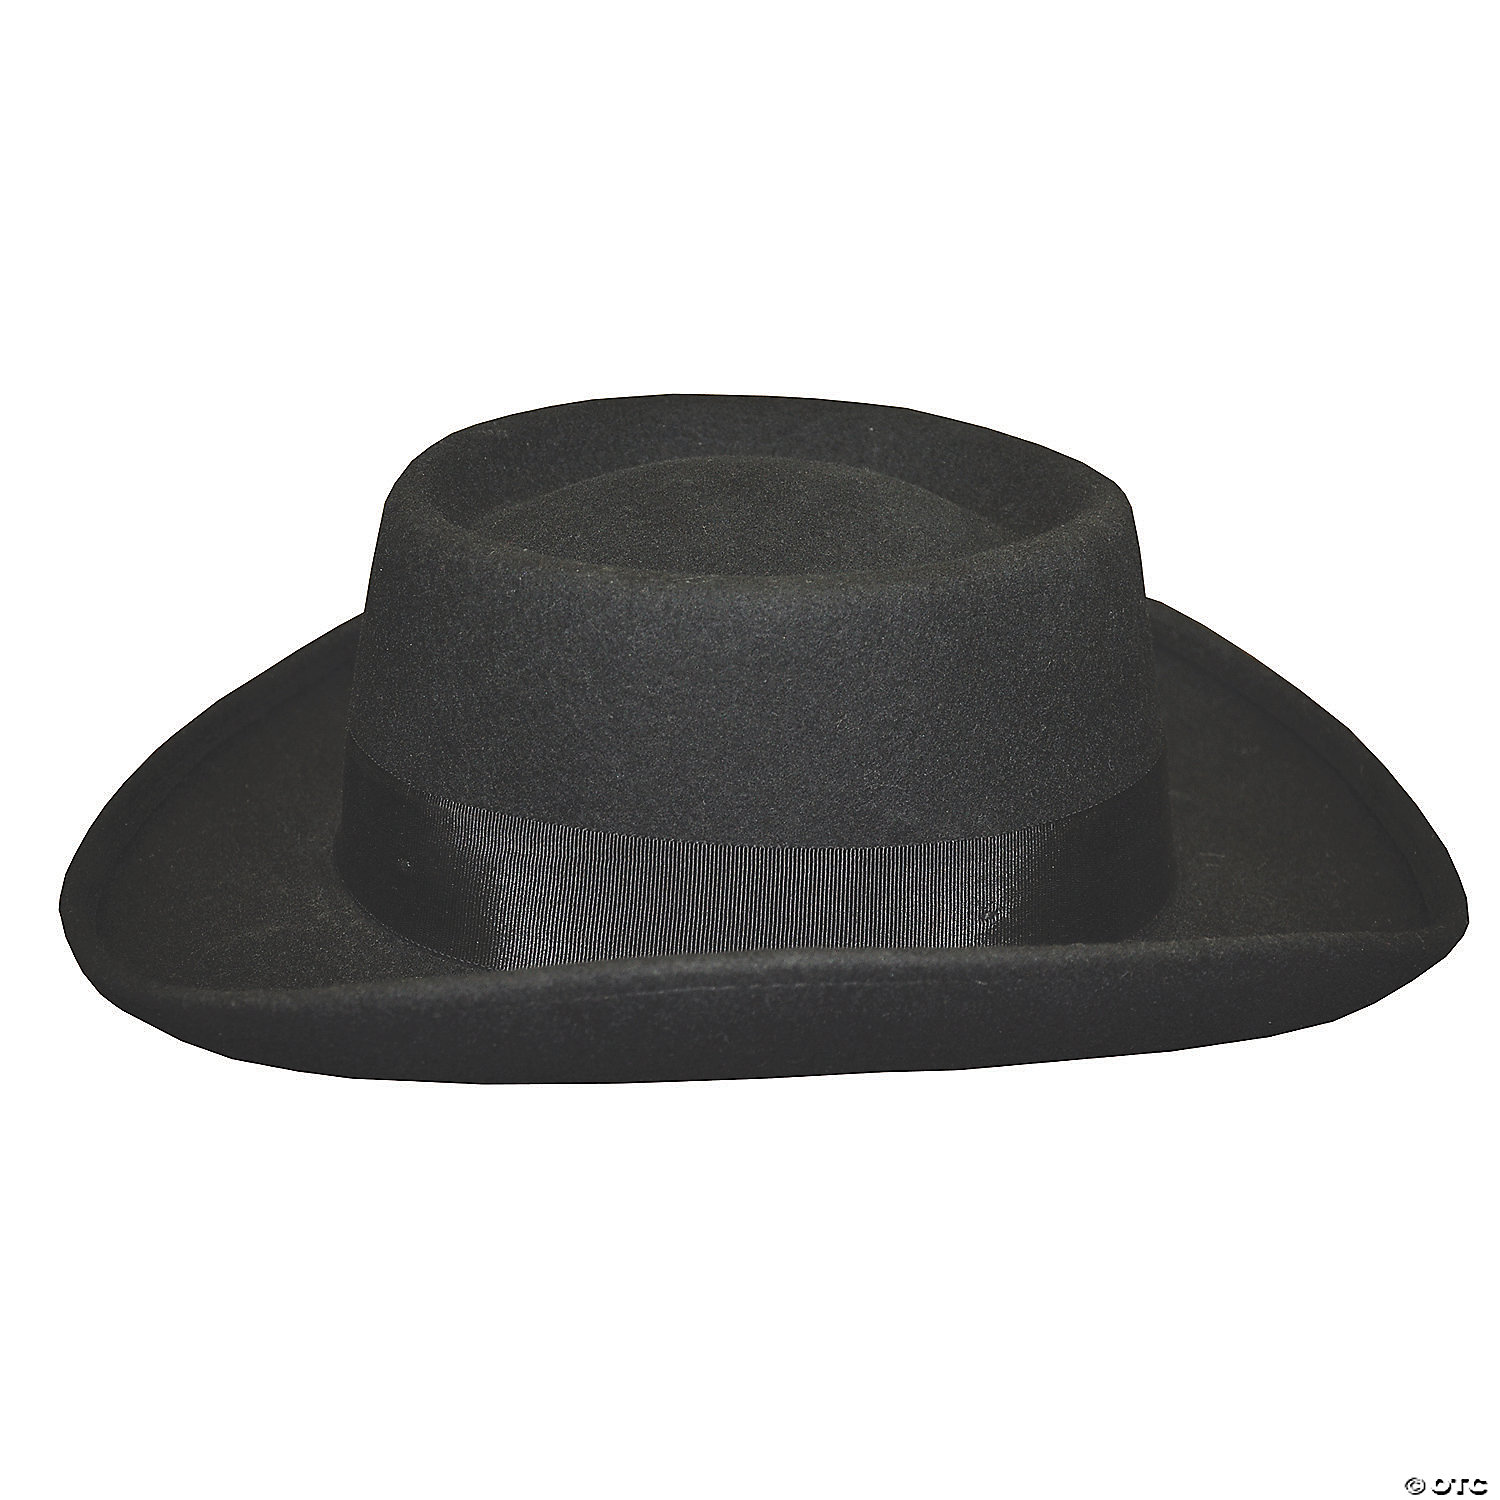 Mad Hatter Straw Top Hat, Black Straw Top Hat, Black Top Hat, Black Straw  Top Hat, Big Straw Top Hat, Amazing Black Straw Hat 